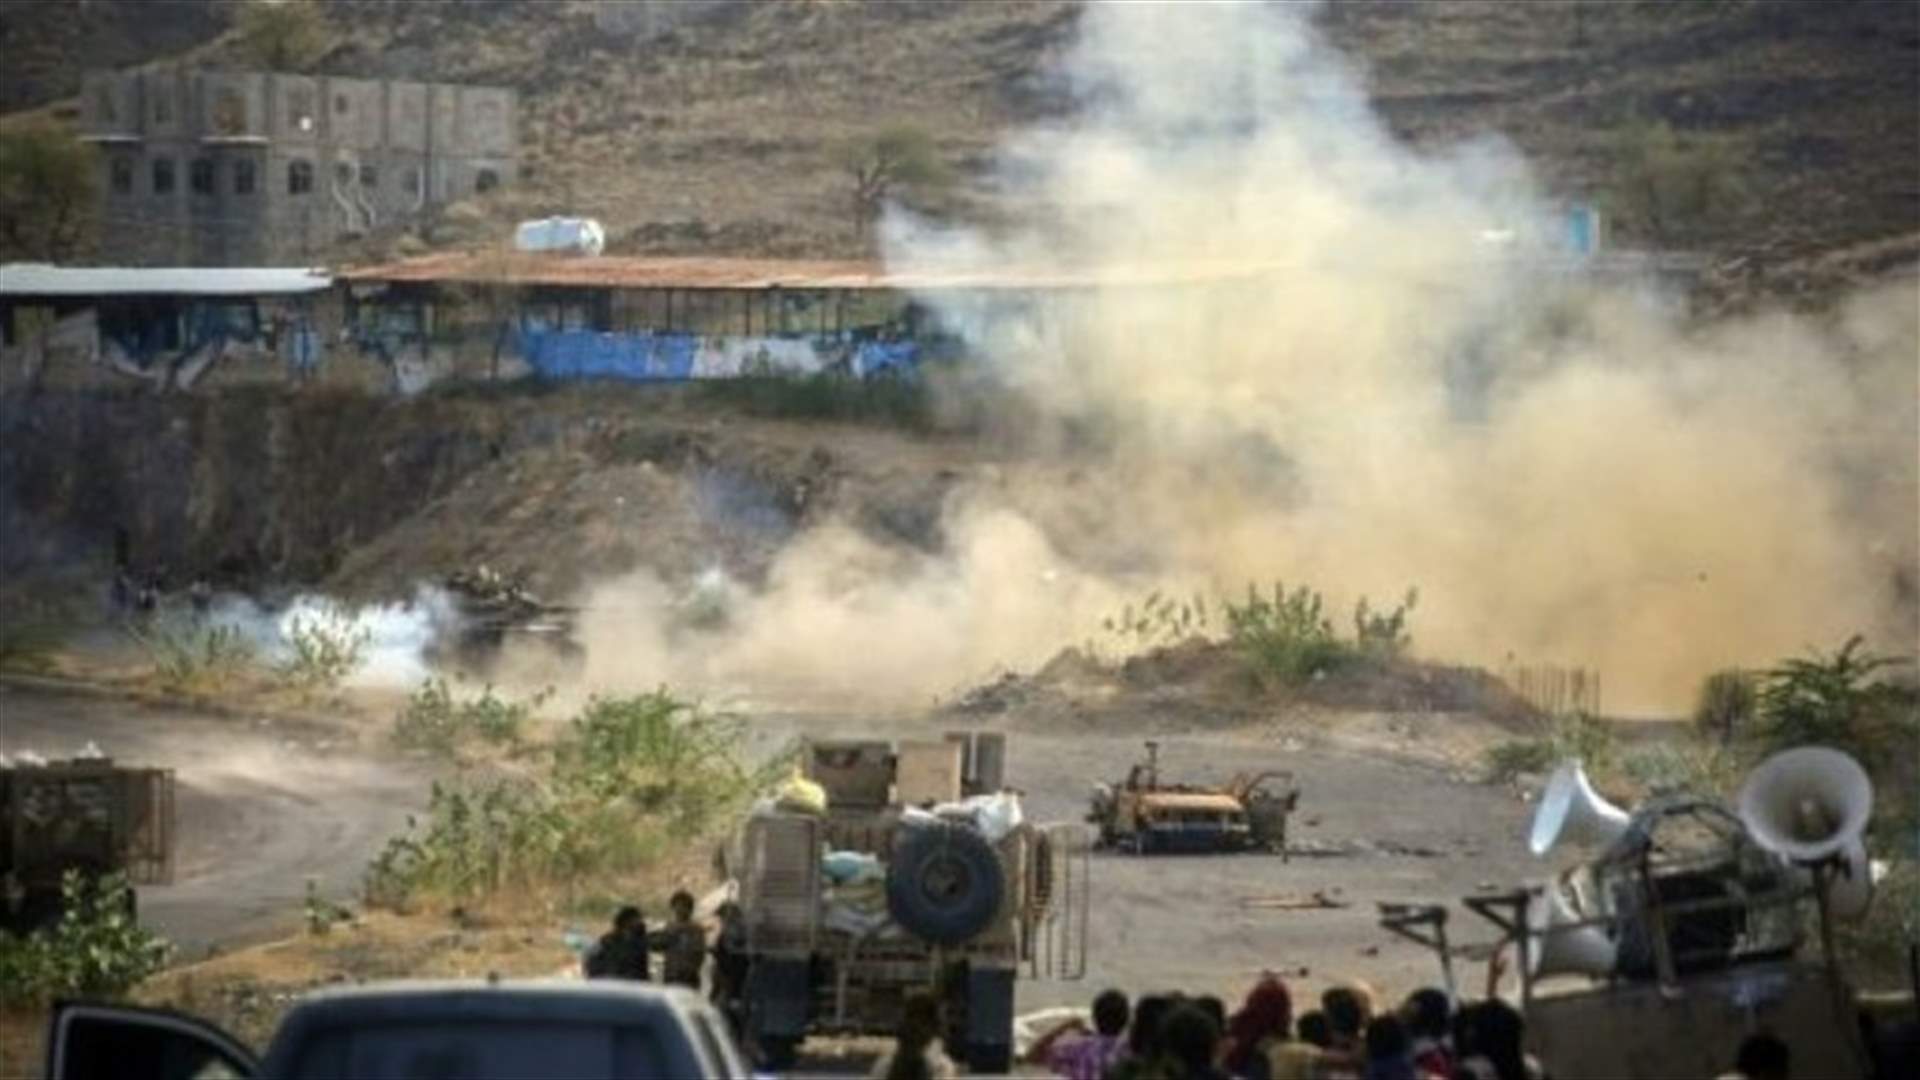 UN Yemen envoy says warring parties refuse to talk as violence escalates